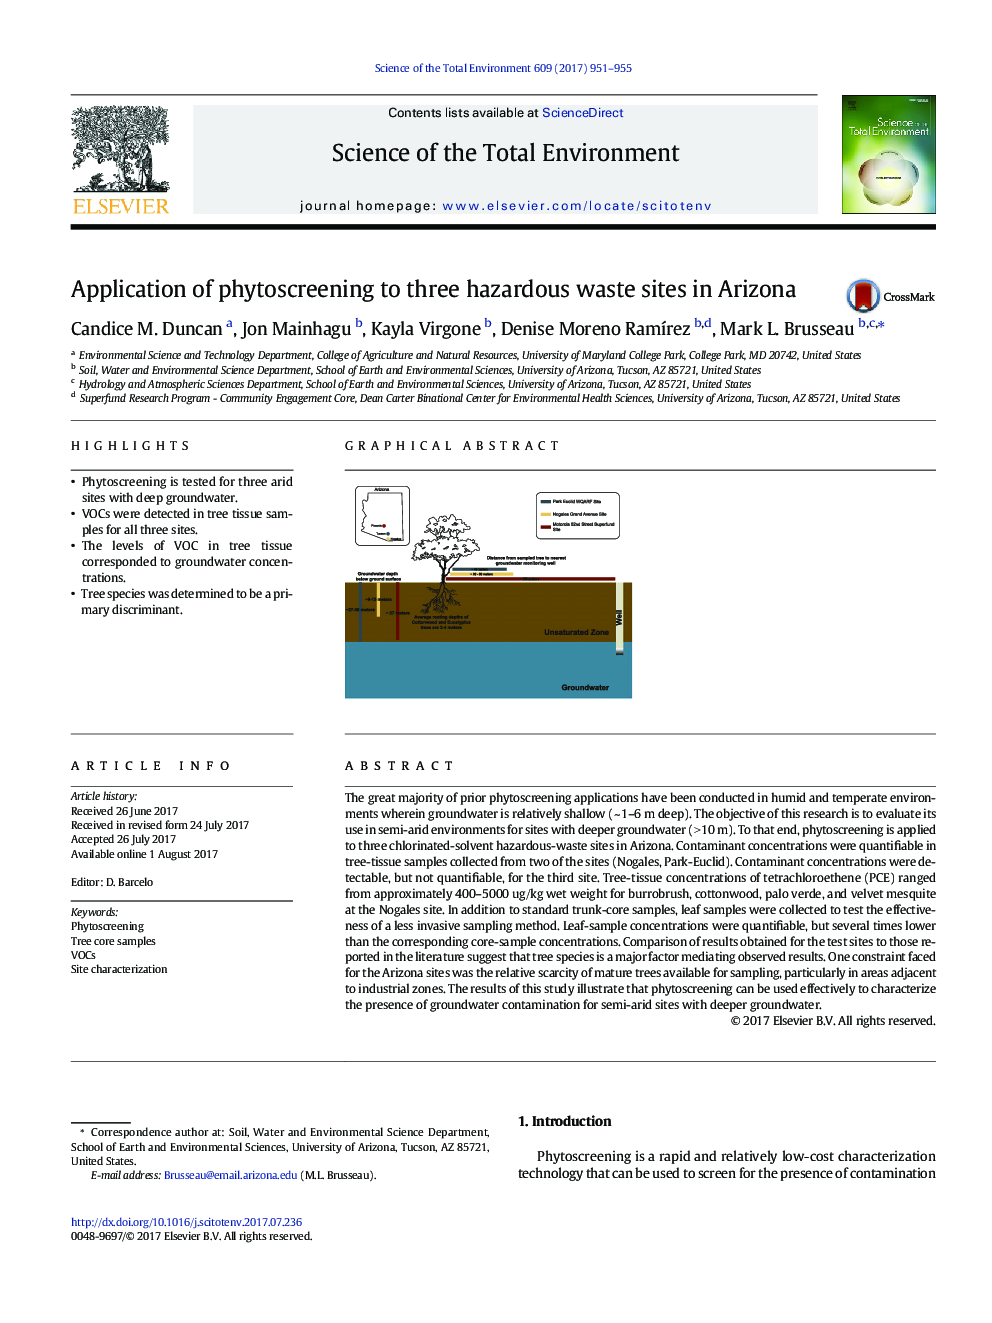 Application of phytoscreening to three hazardous waste sites in Arizona